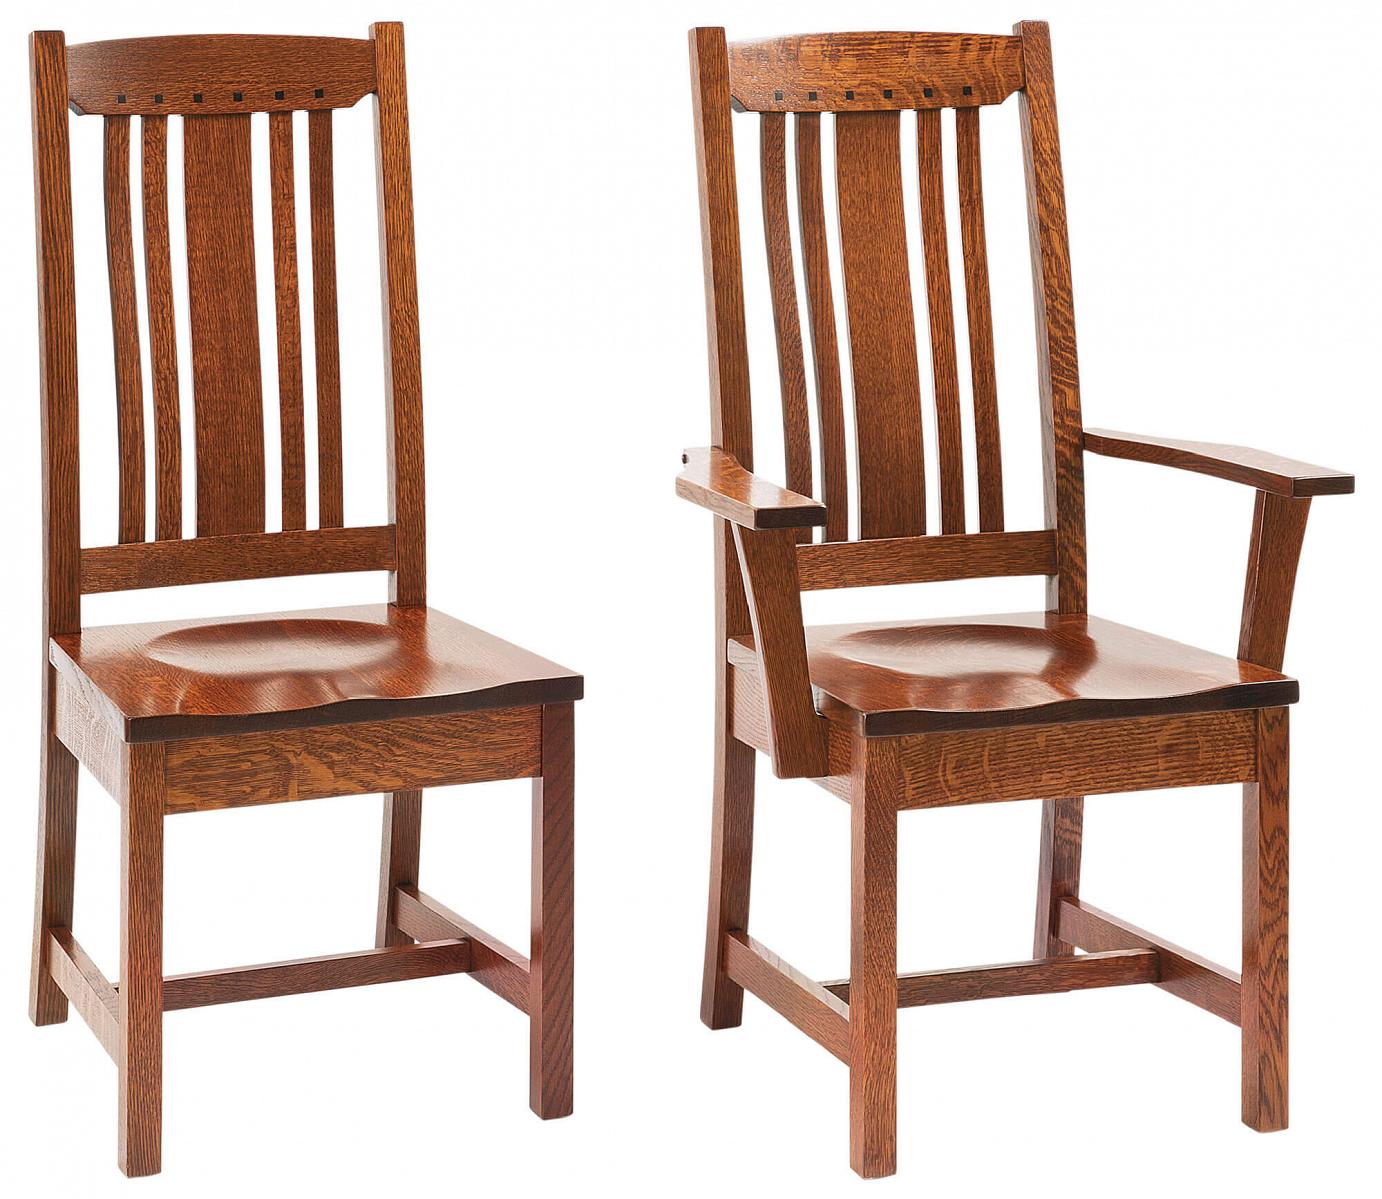 RH Yoder Grant Chairs